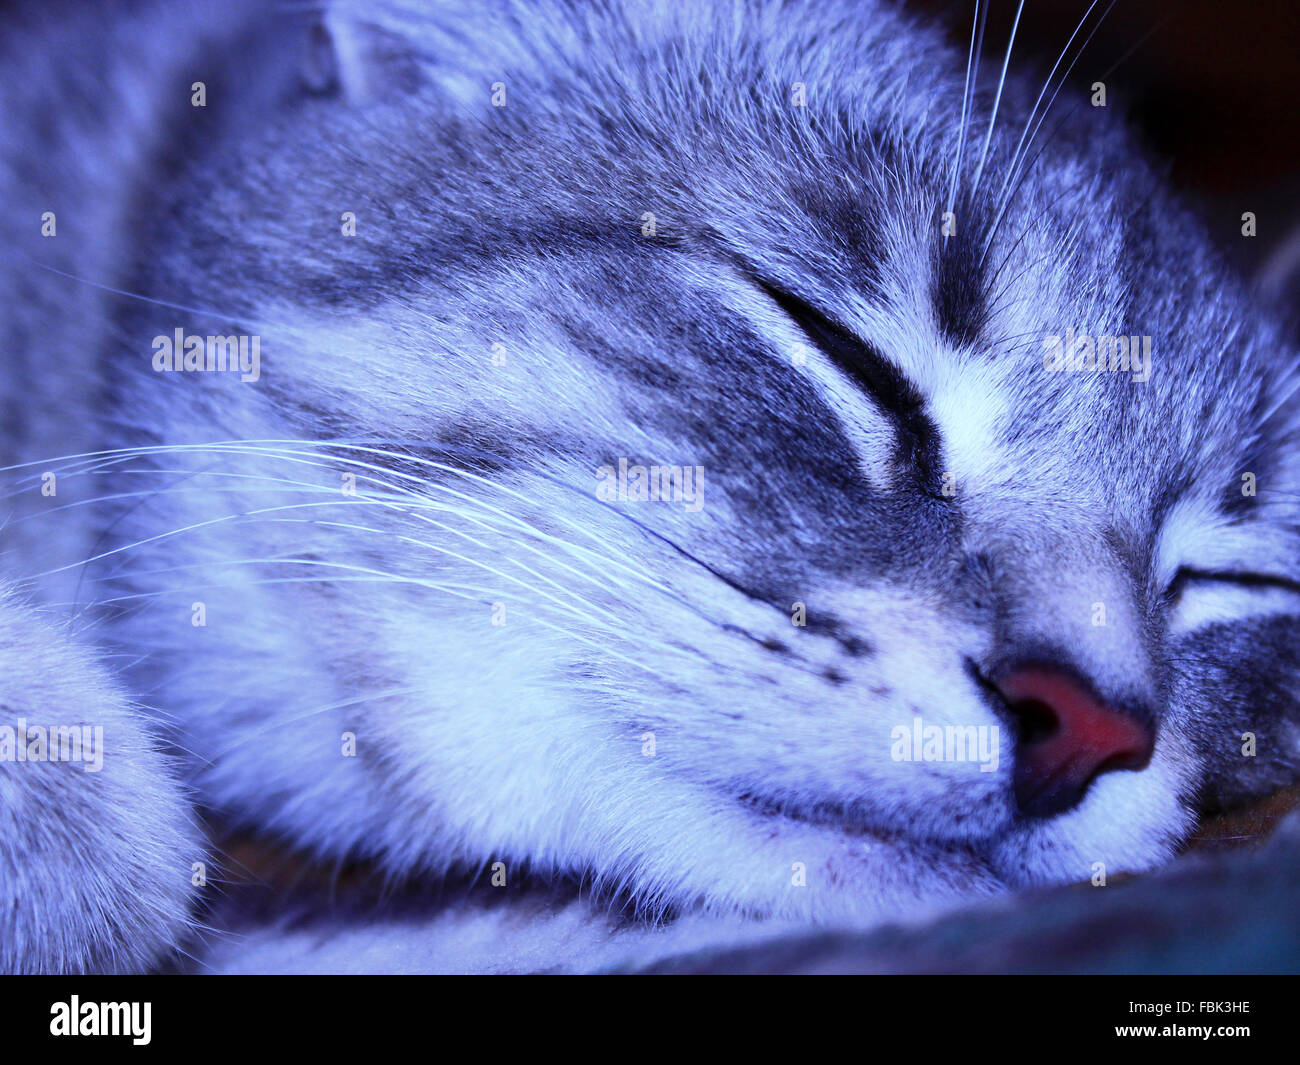 close-up of muzzle of Scottish Straight cat Stock Photo